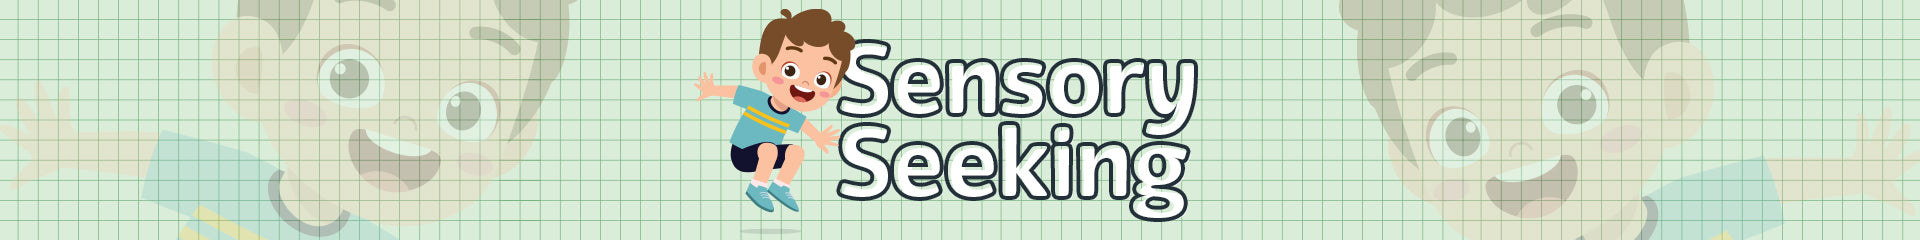 Sensory Seeking